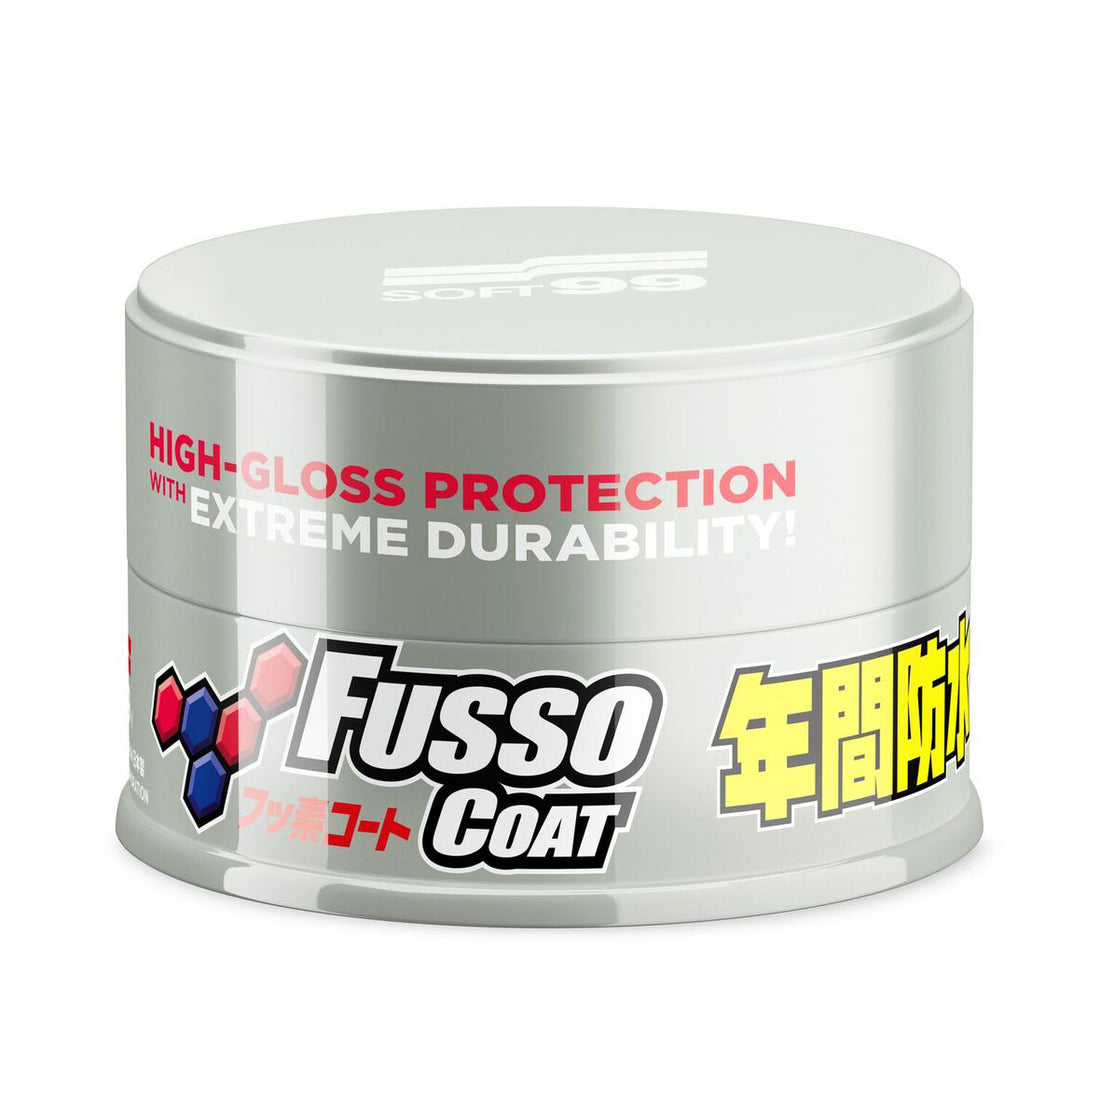 Soft99 Voks - New Fusso Coat 12 Months Wax White - BilligStyling